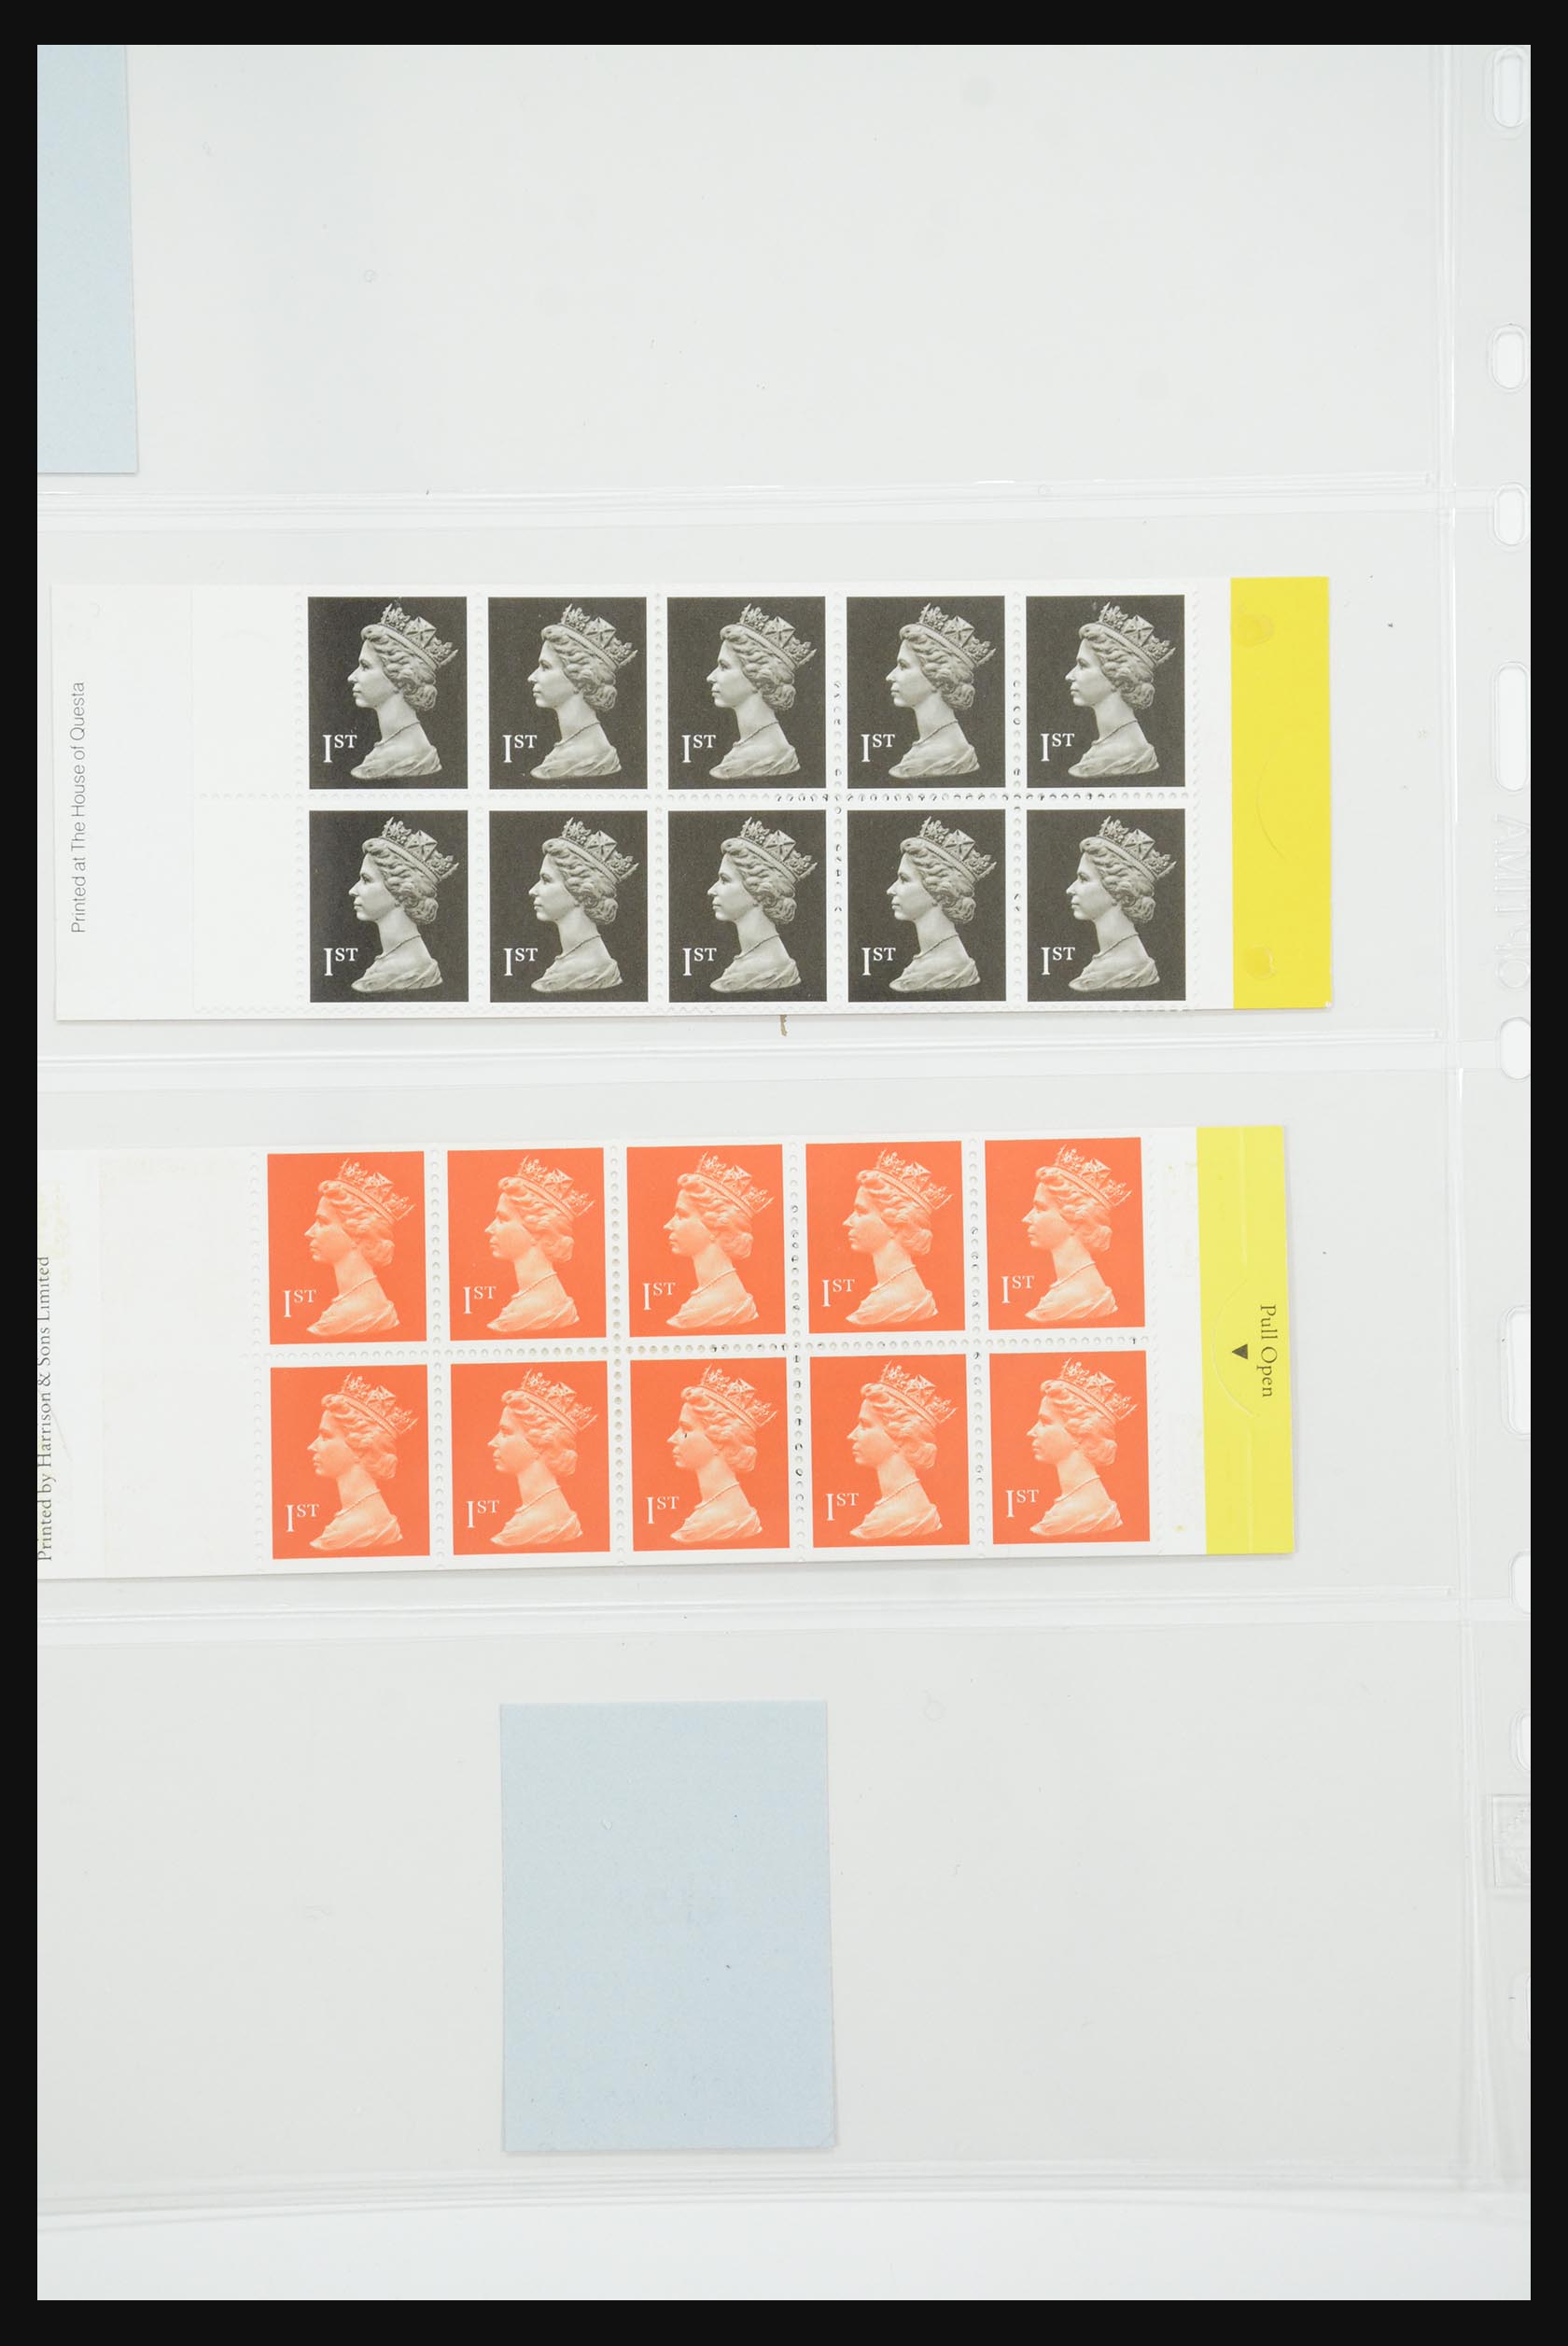 31960 096 - 31960 Great Britain stampbooklets 1989-2000.